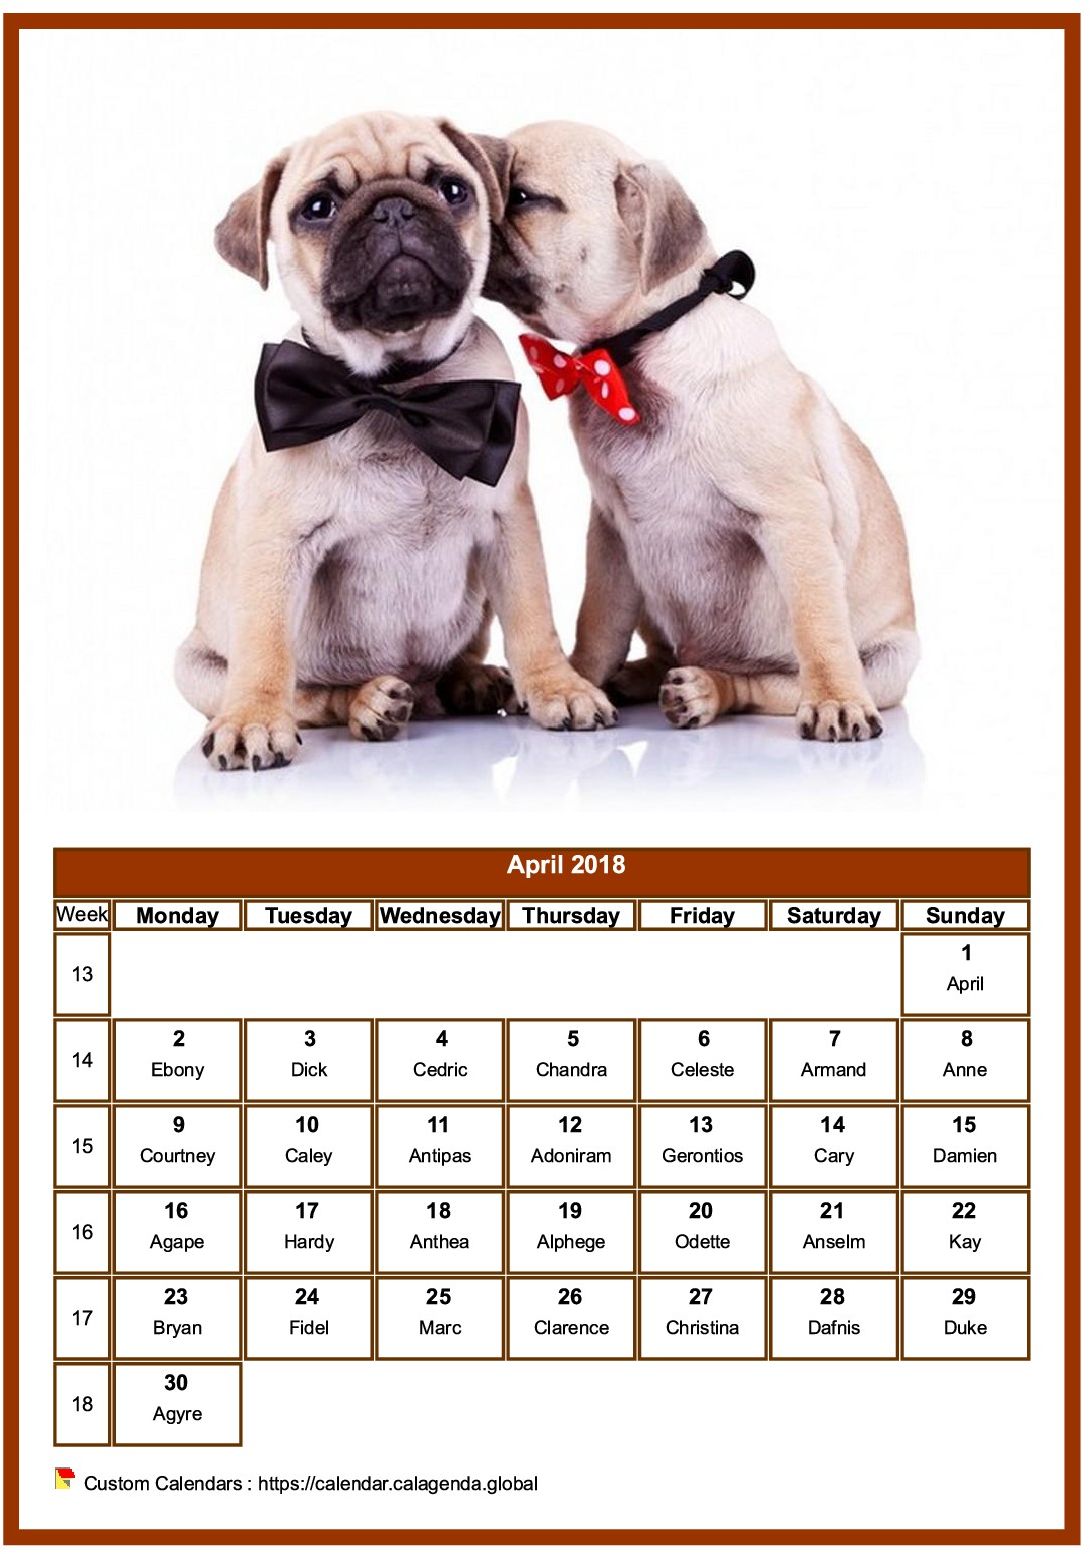 Calendar April 2018 dogs